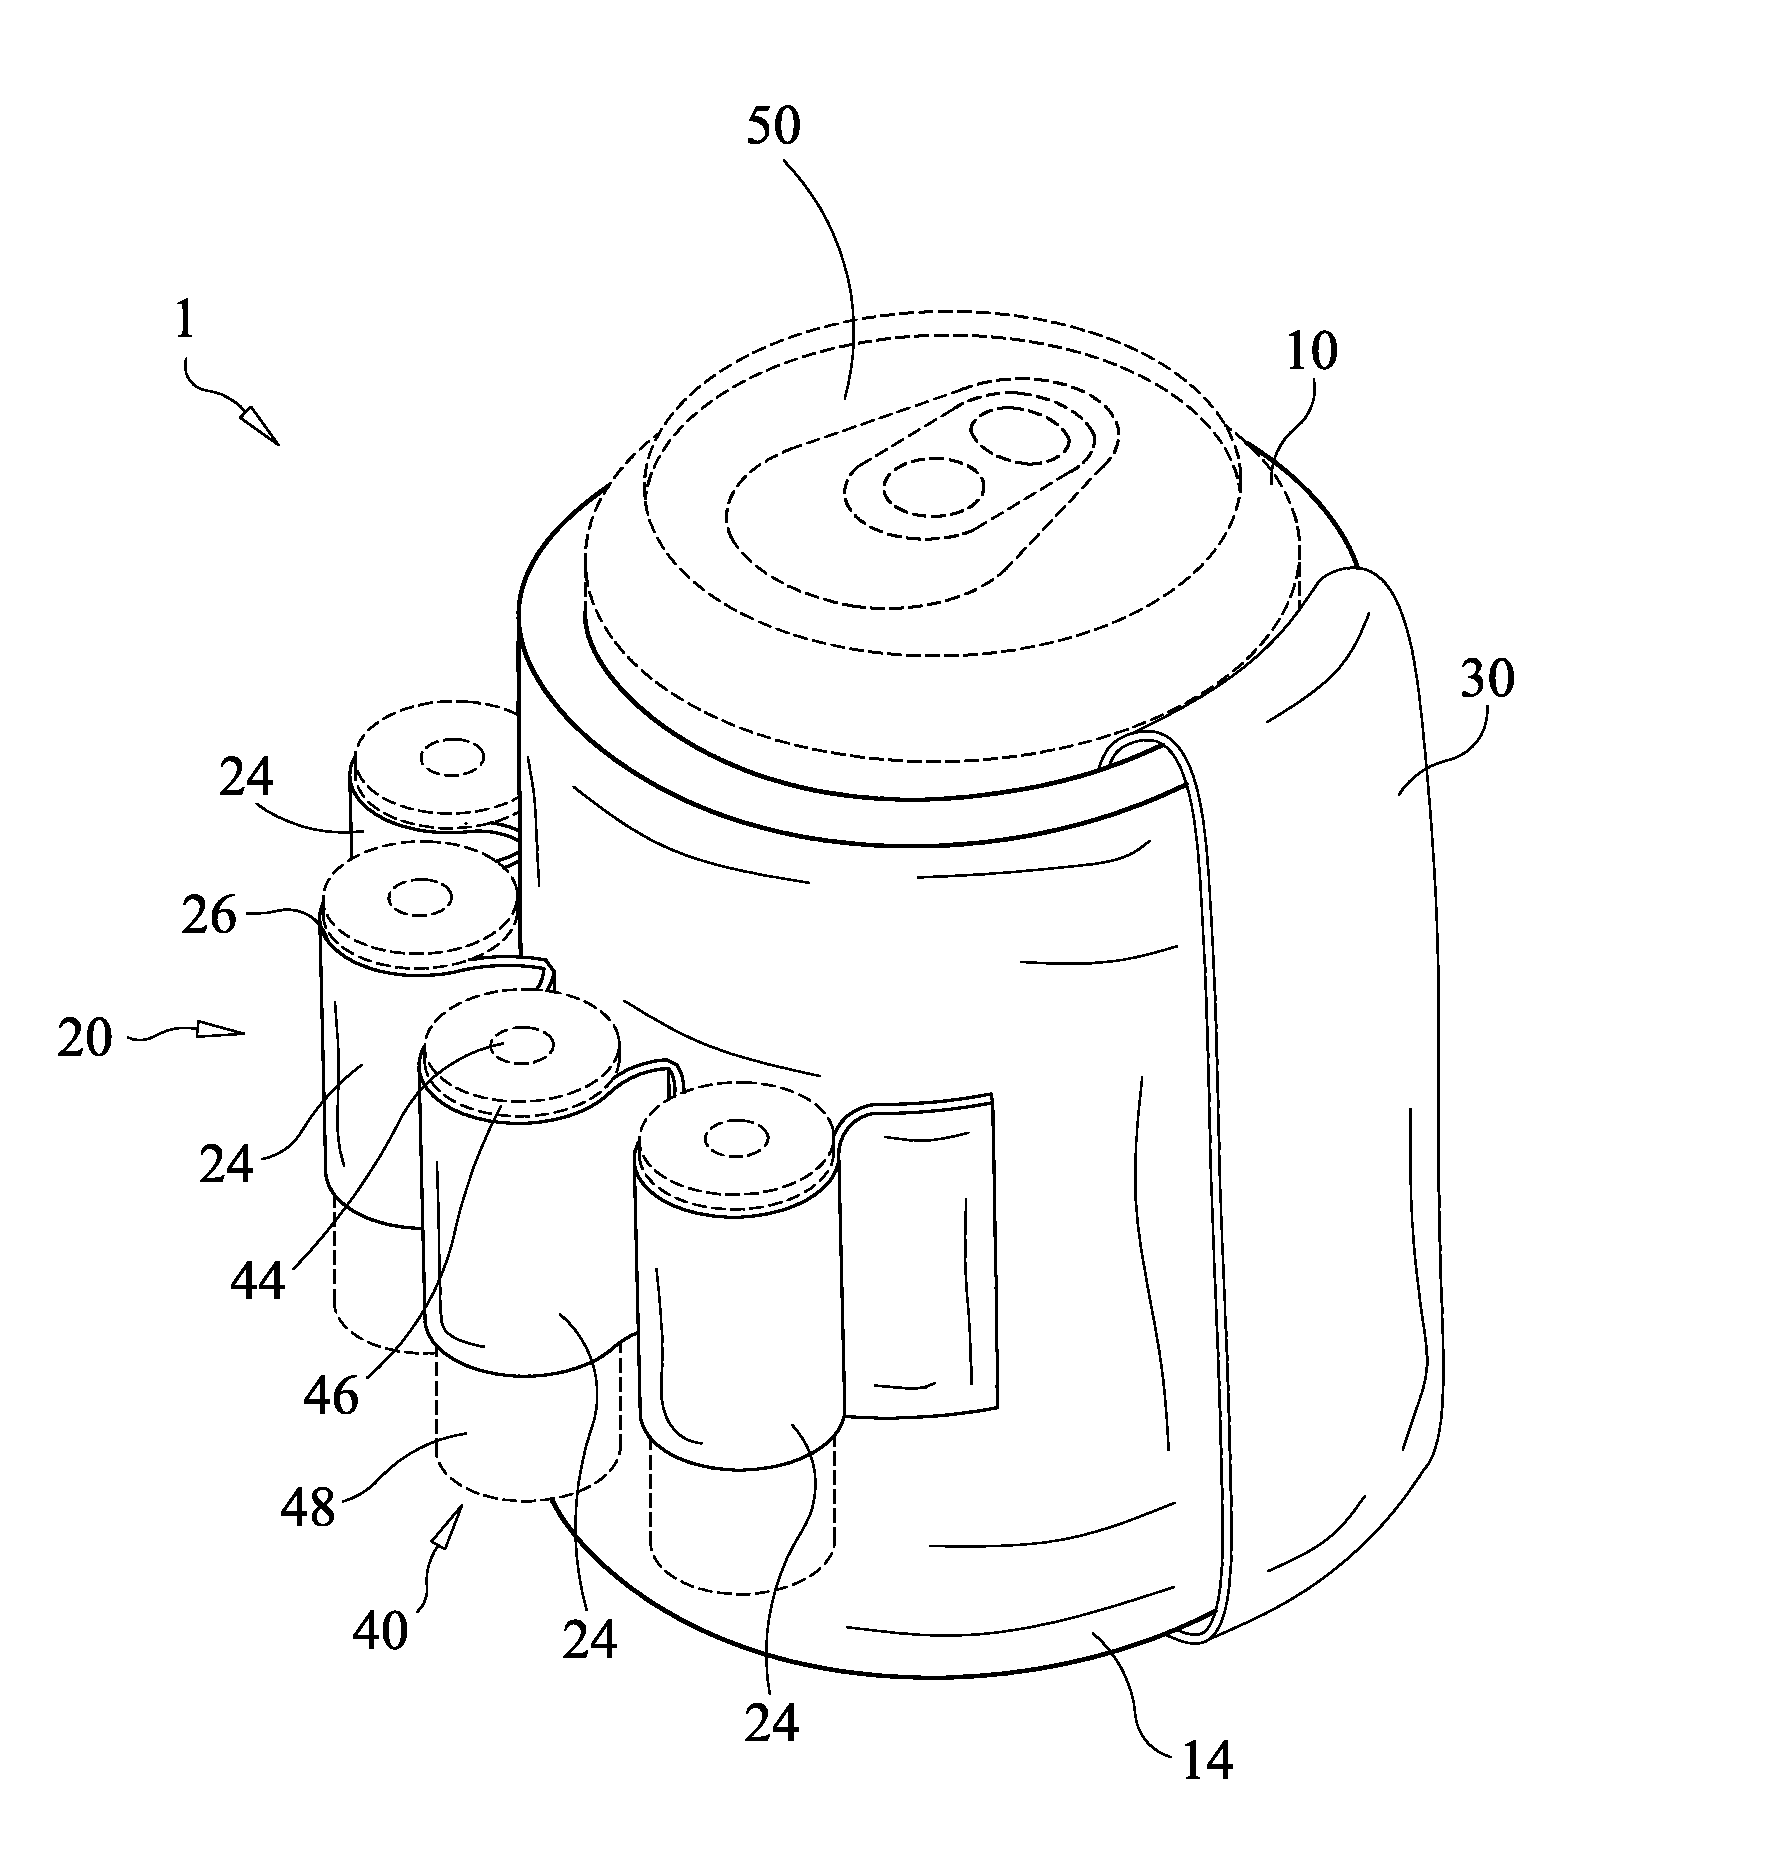 Ammunition-holding beverage insulator